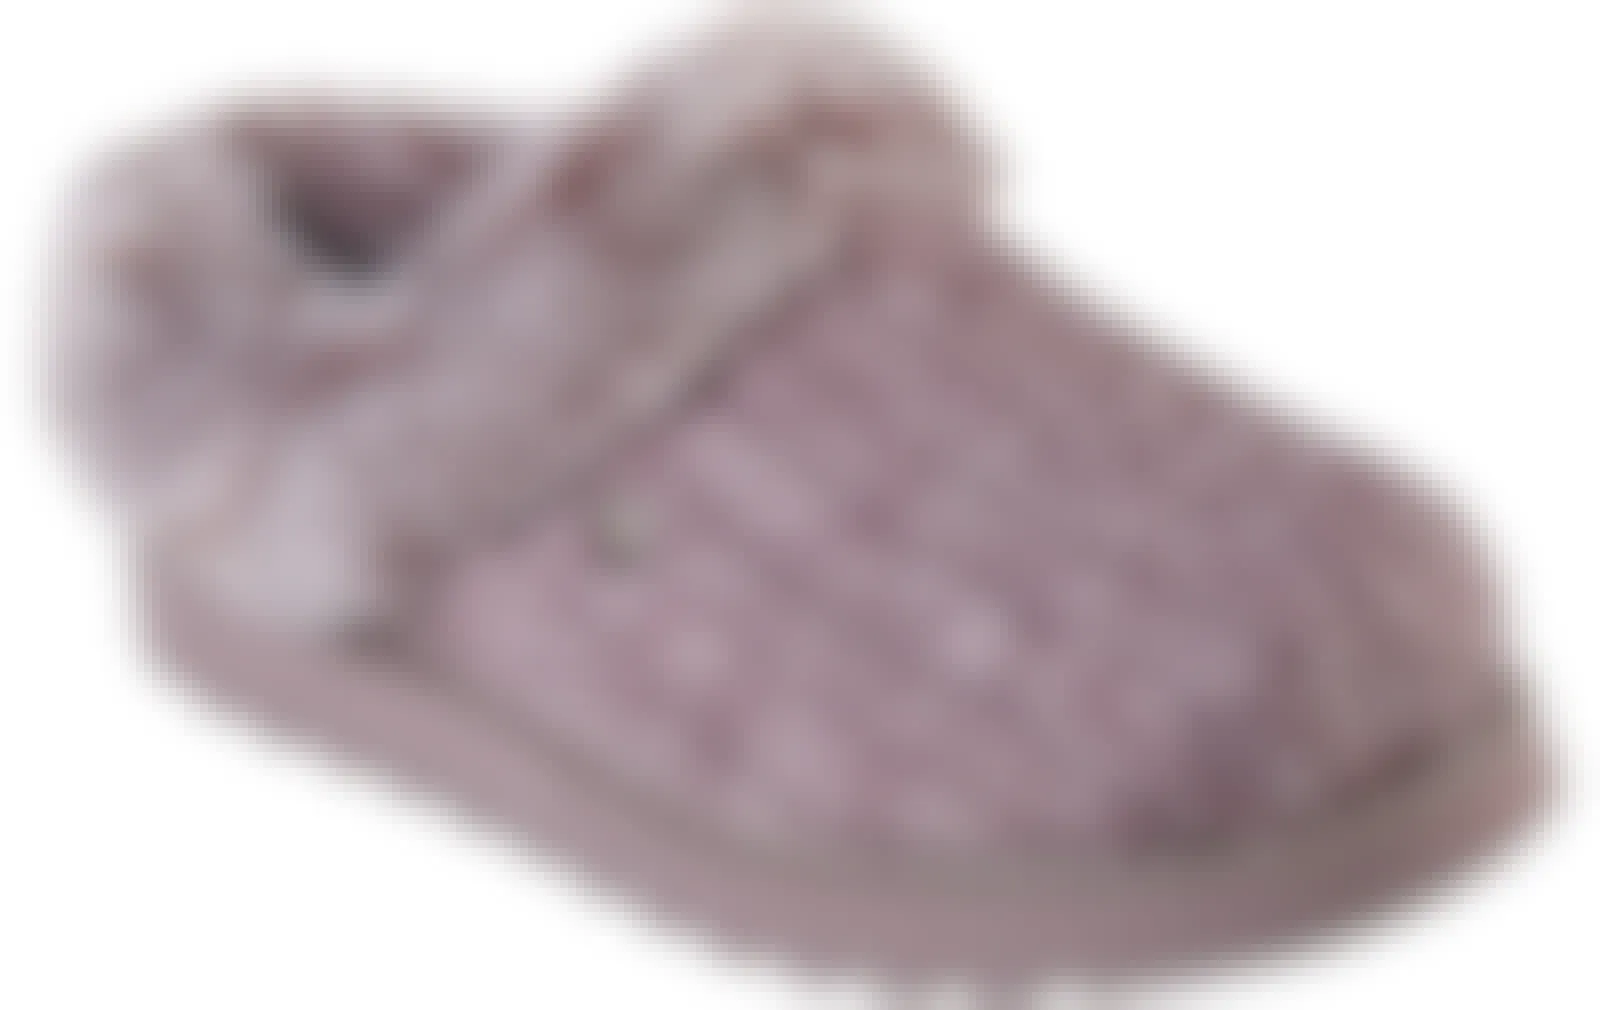 A Skechers BOBS Keepsakes shoe on a white background.